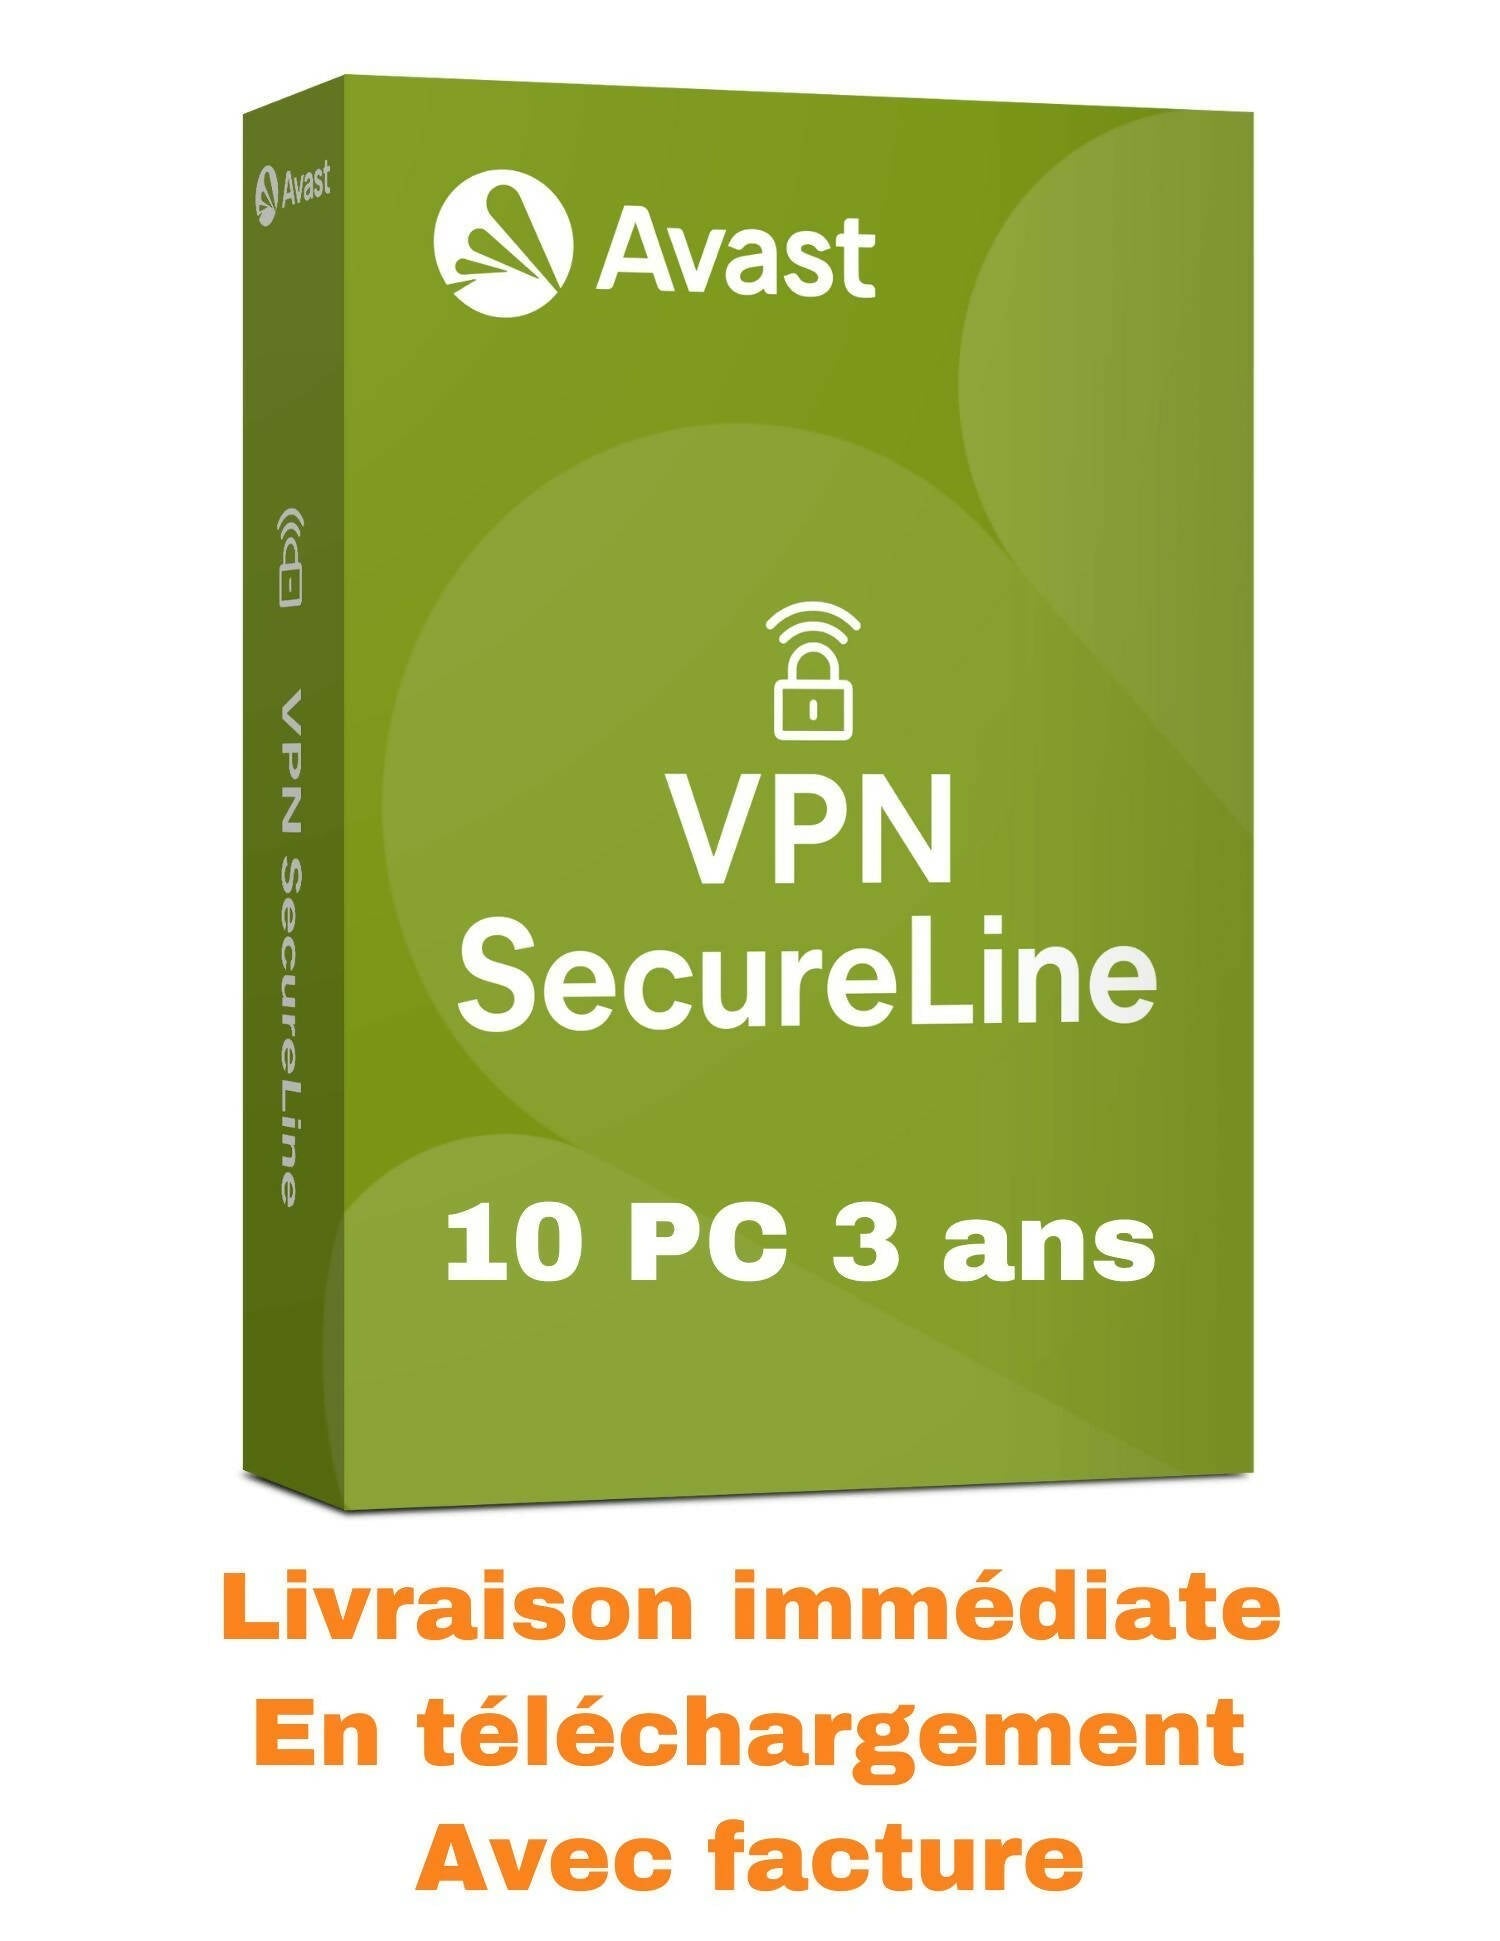 Avast Secureline VPN 10 appareils 3 ans clicktofournisseur.com